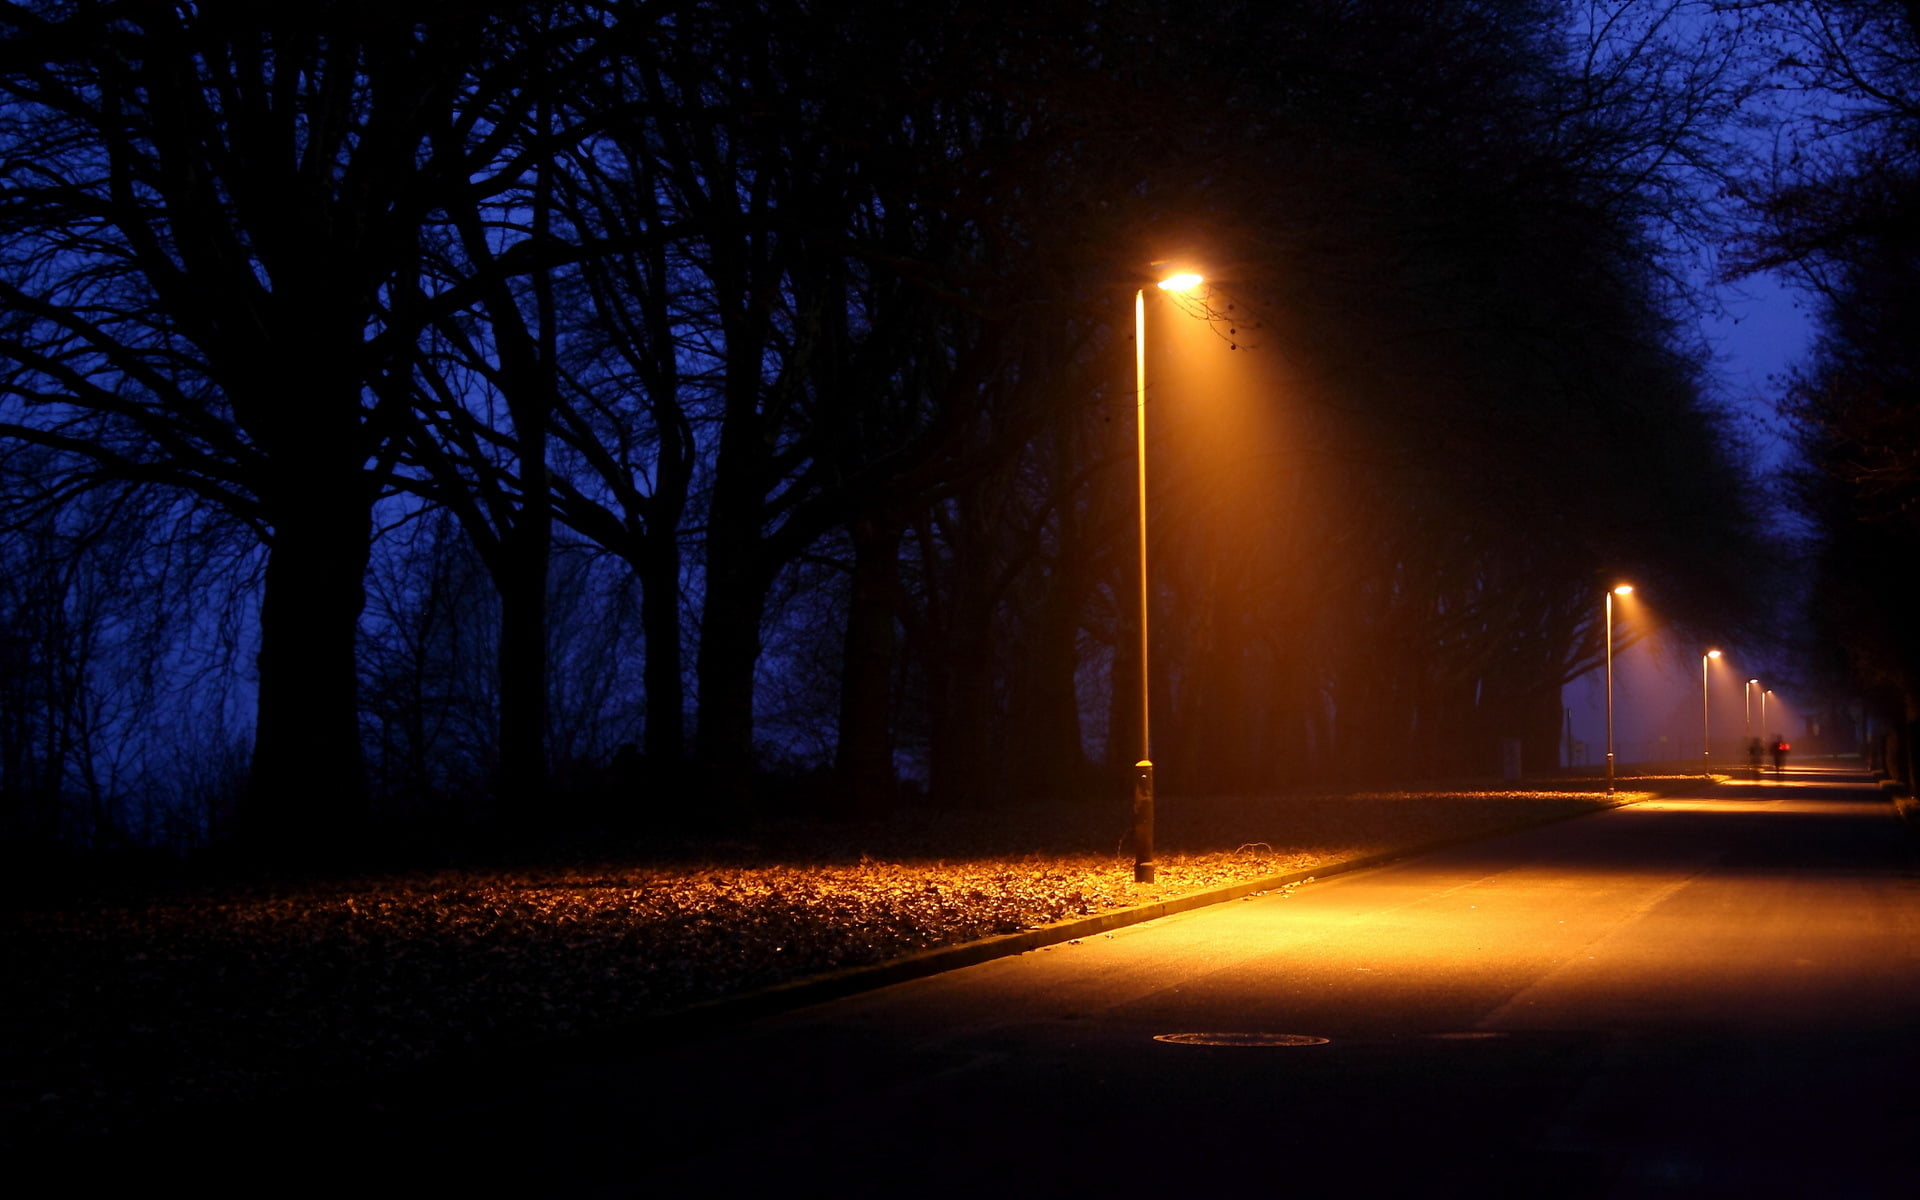 gray lamp posts, night, the city, Park, tree, street, dark, illuminated